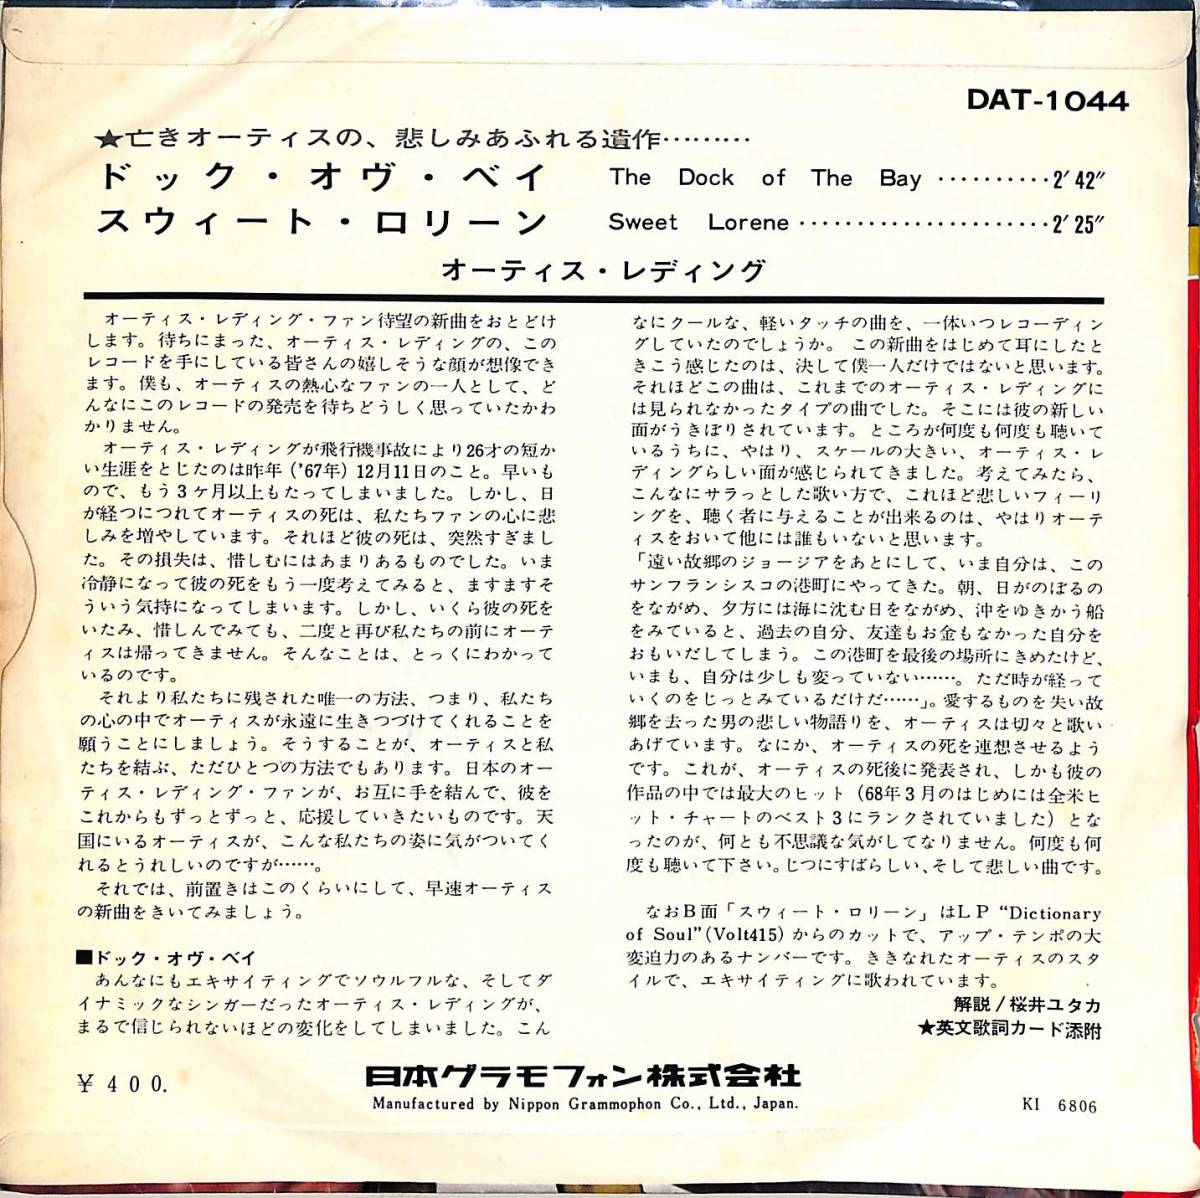 C00191978/EP/オーティス・レディング(OTIS REDDING)「The Dock Of The Bay / Sweet Lorene (1968年・DAT-1044・ソウル・SOUL)」_画像2